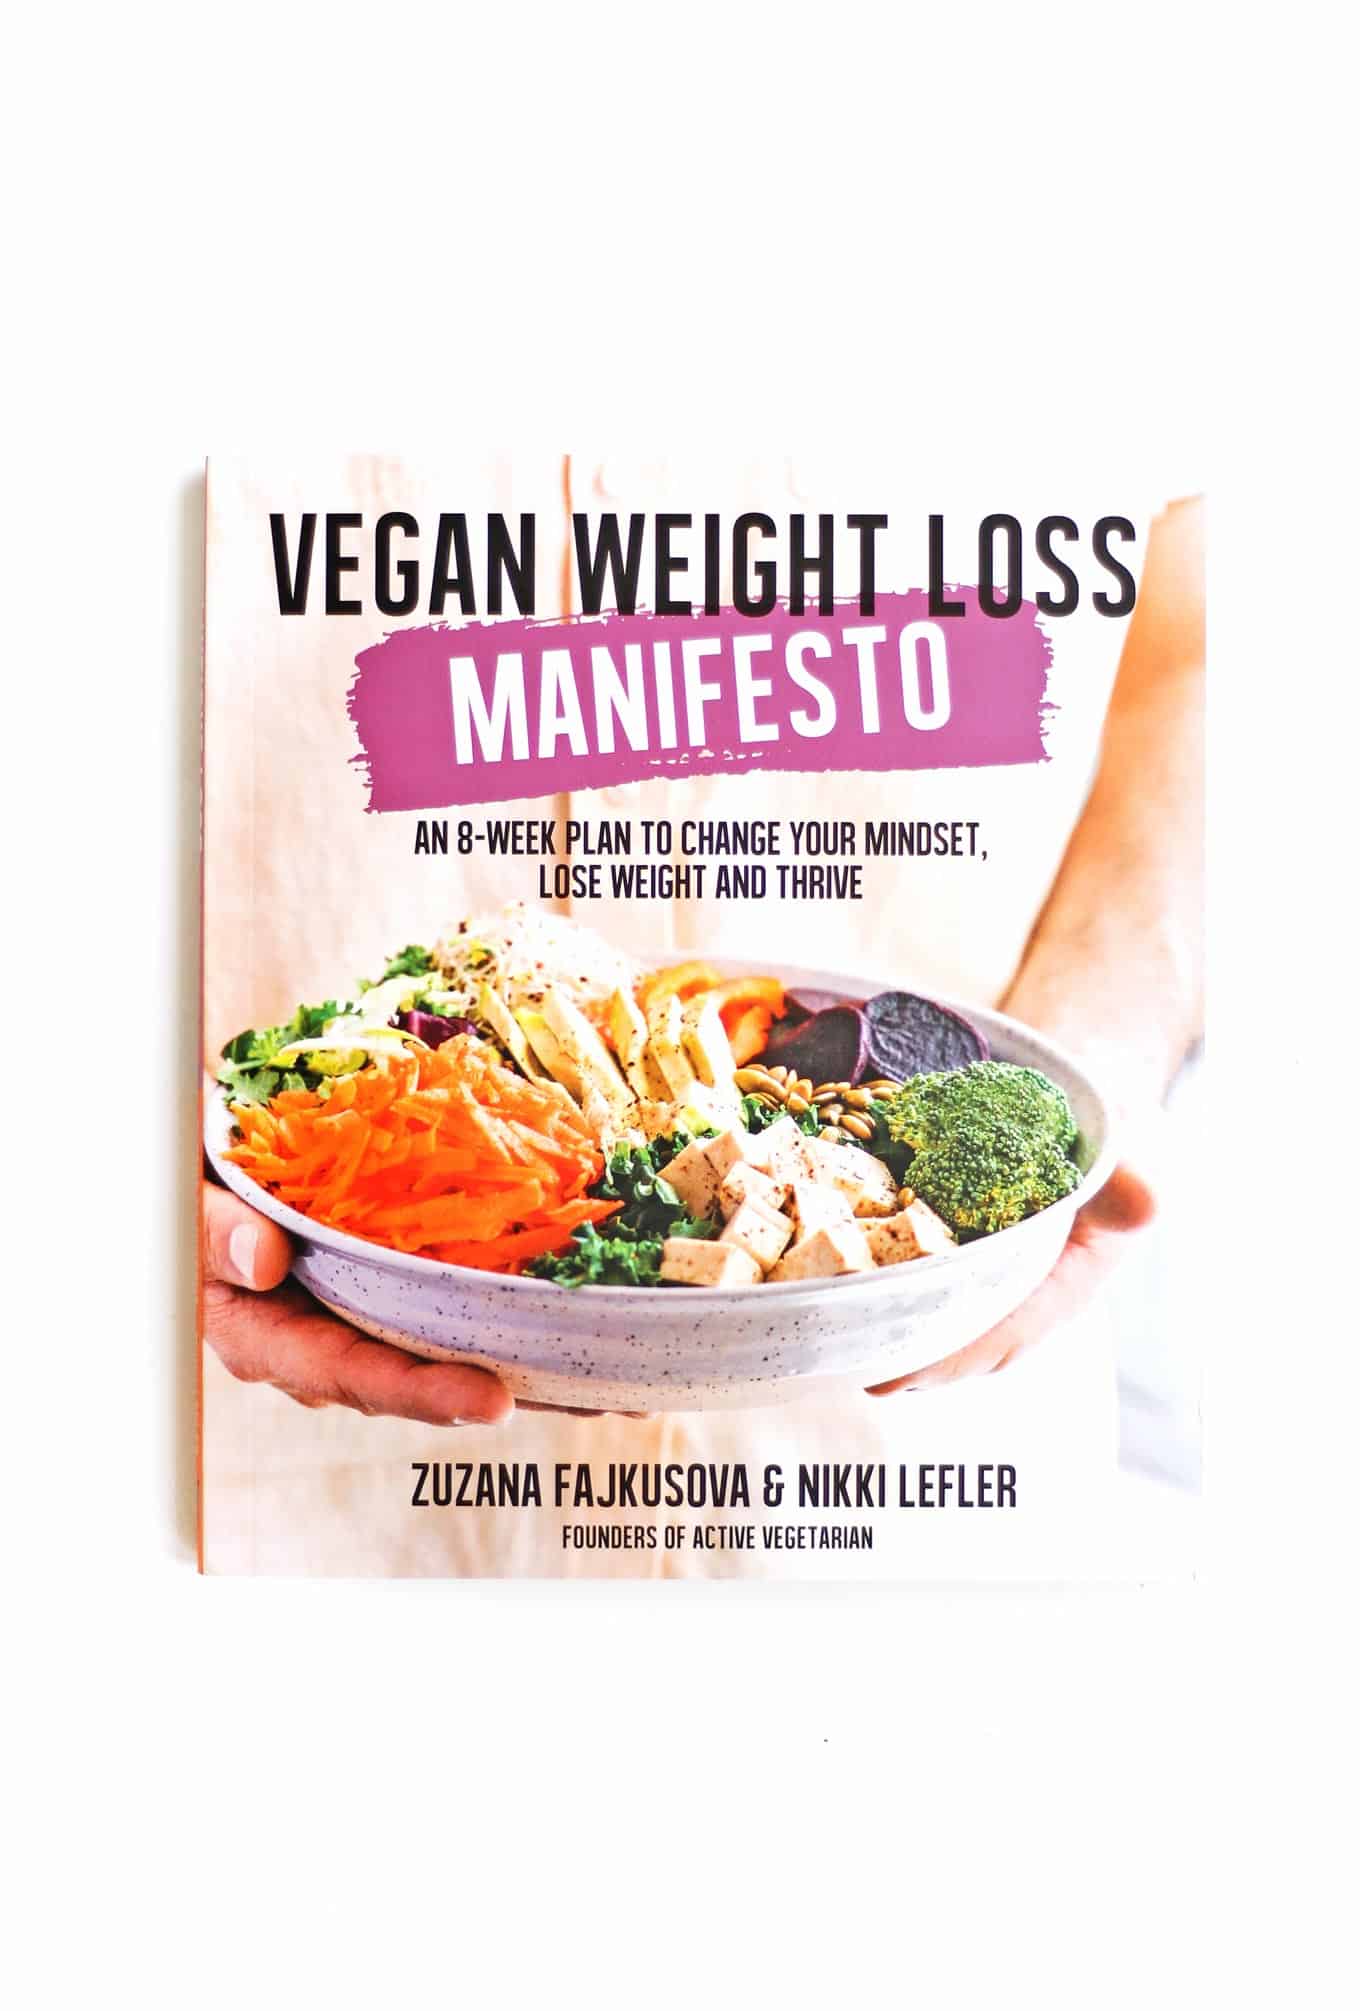 Vegan Weight Loss Manifesto cookbook